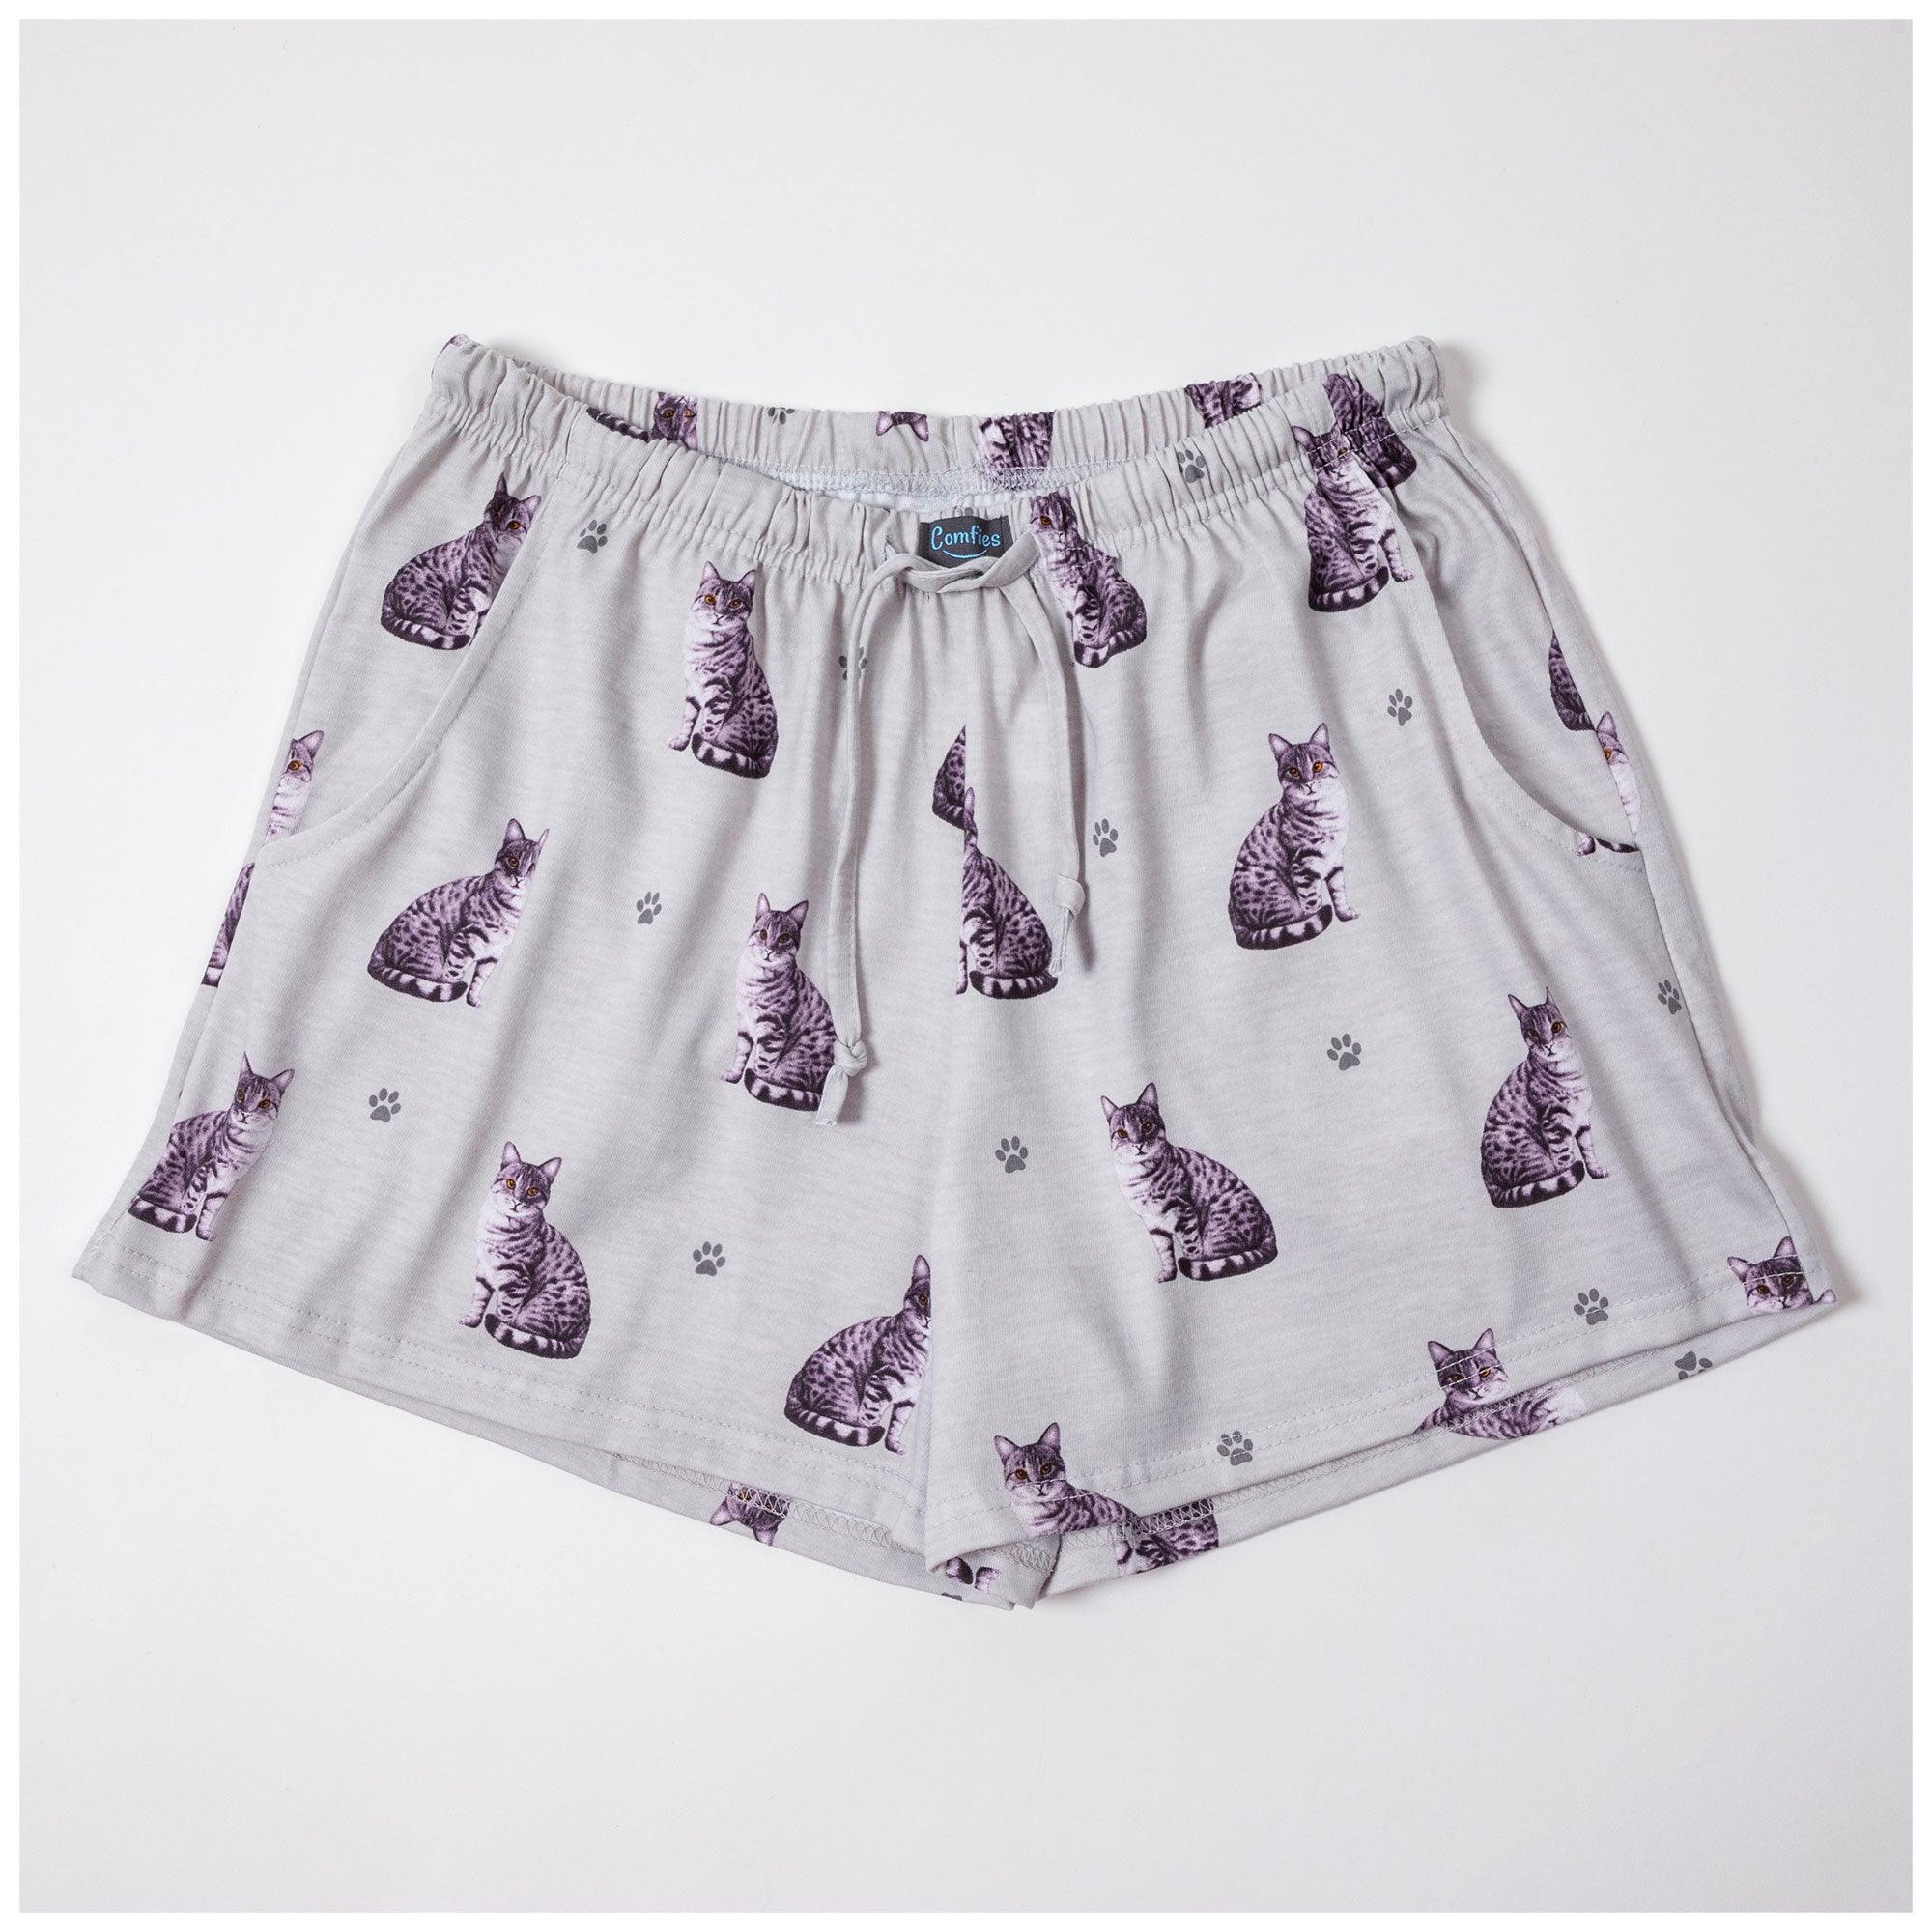 Cute Cat Lounge Shorts - Silver Tabby Cat - L